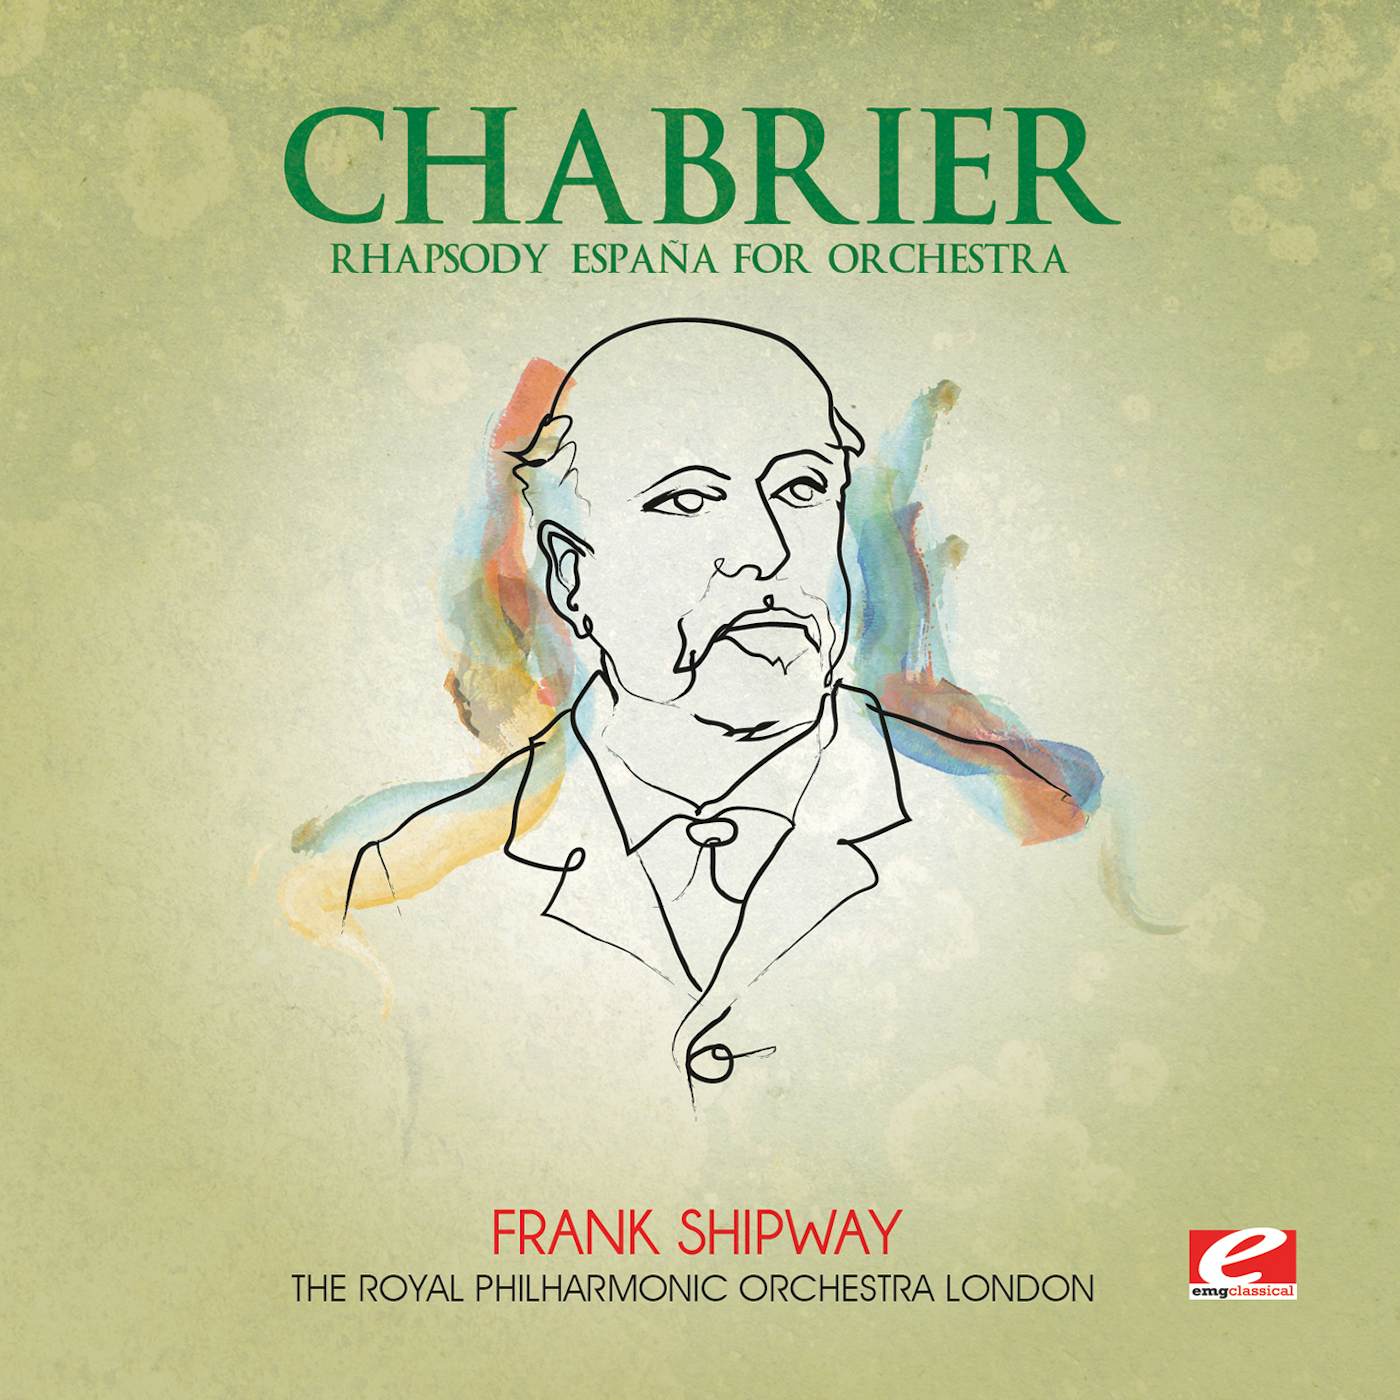 Chabrier RHAPSODY ESPANA FOR ORCHESTRA CD